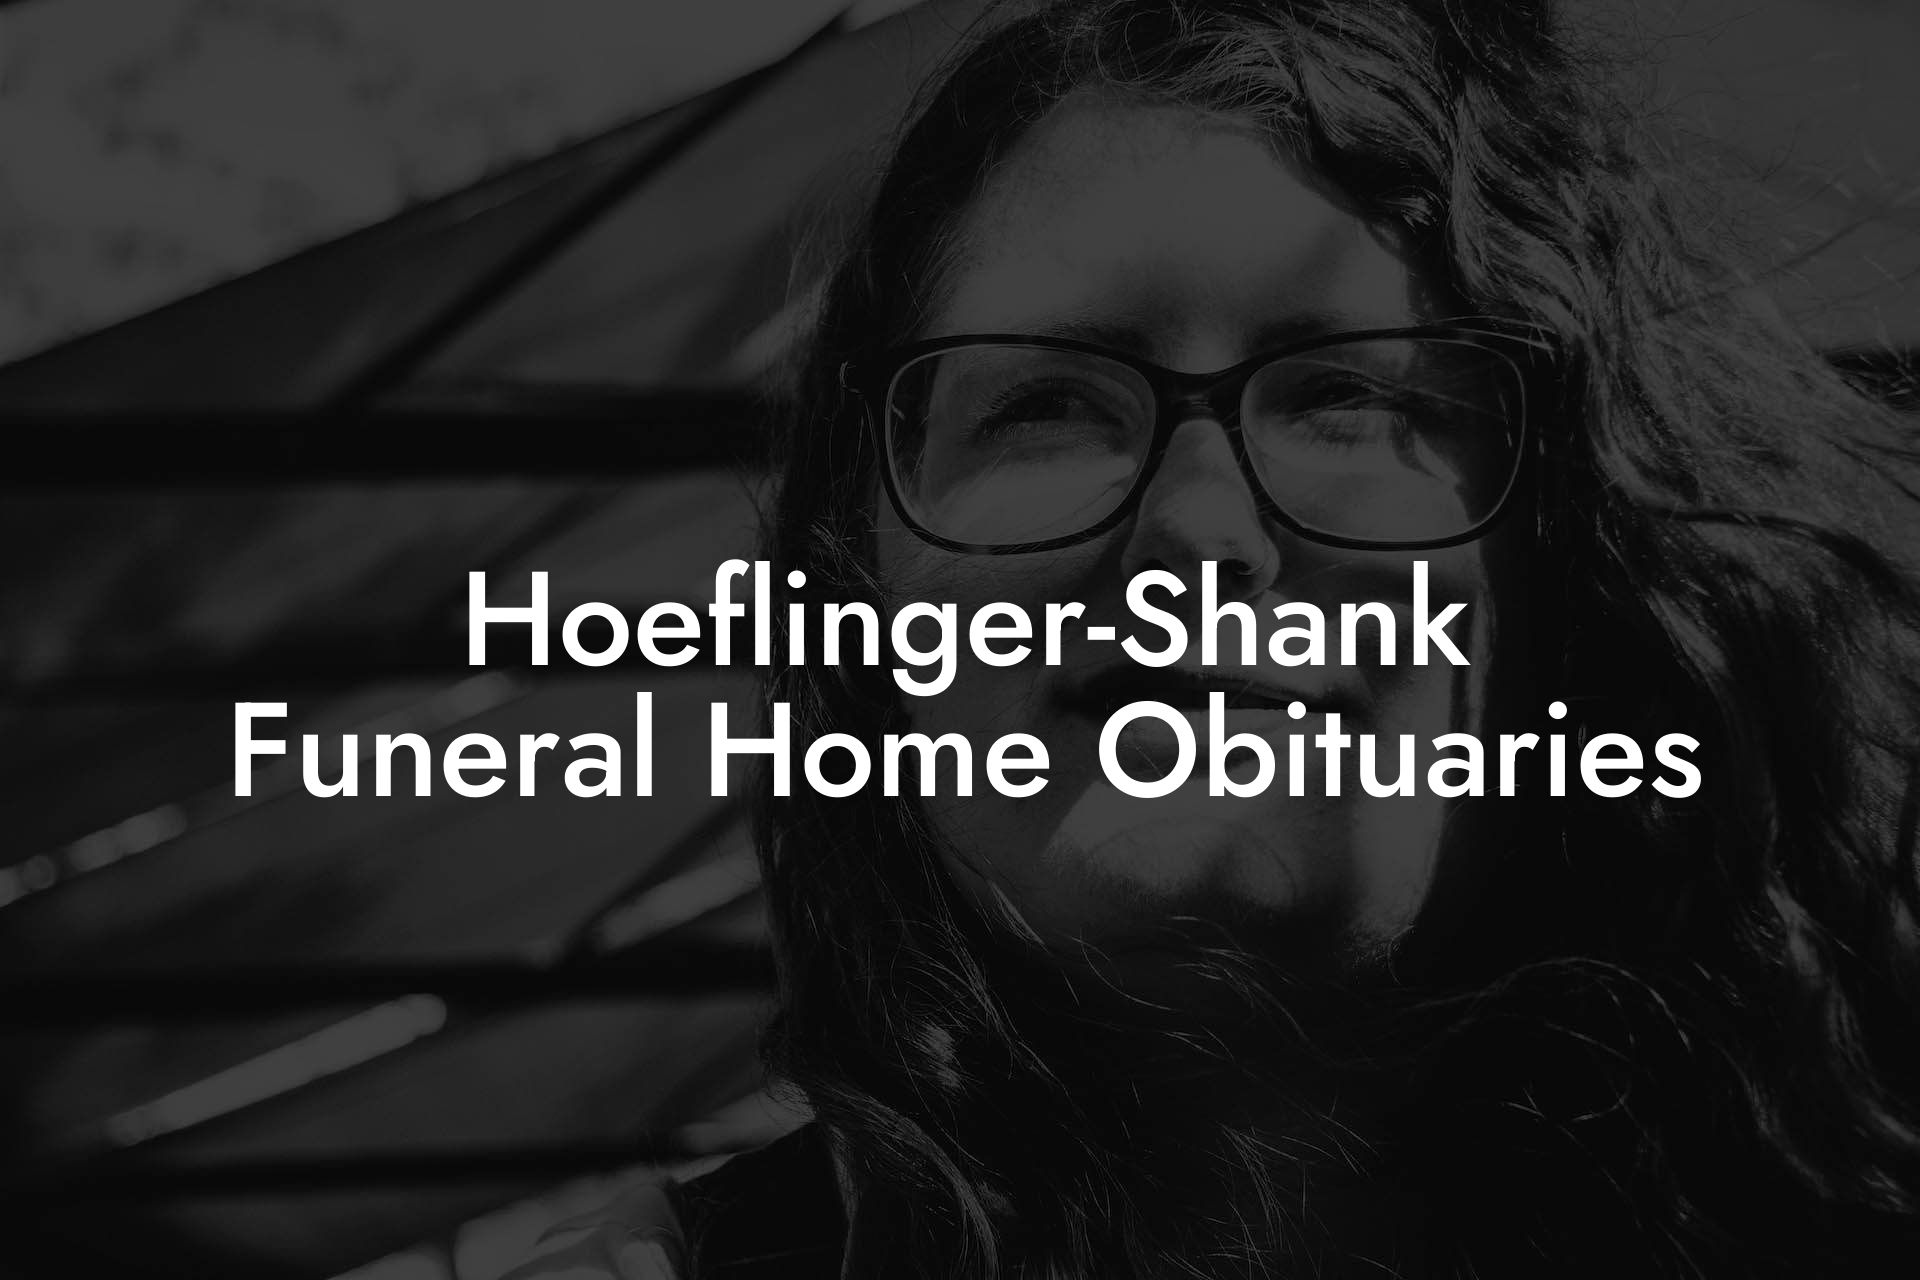 Hoeflinger-Shank Funeral Home Obituaries